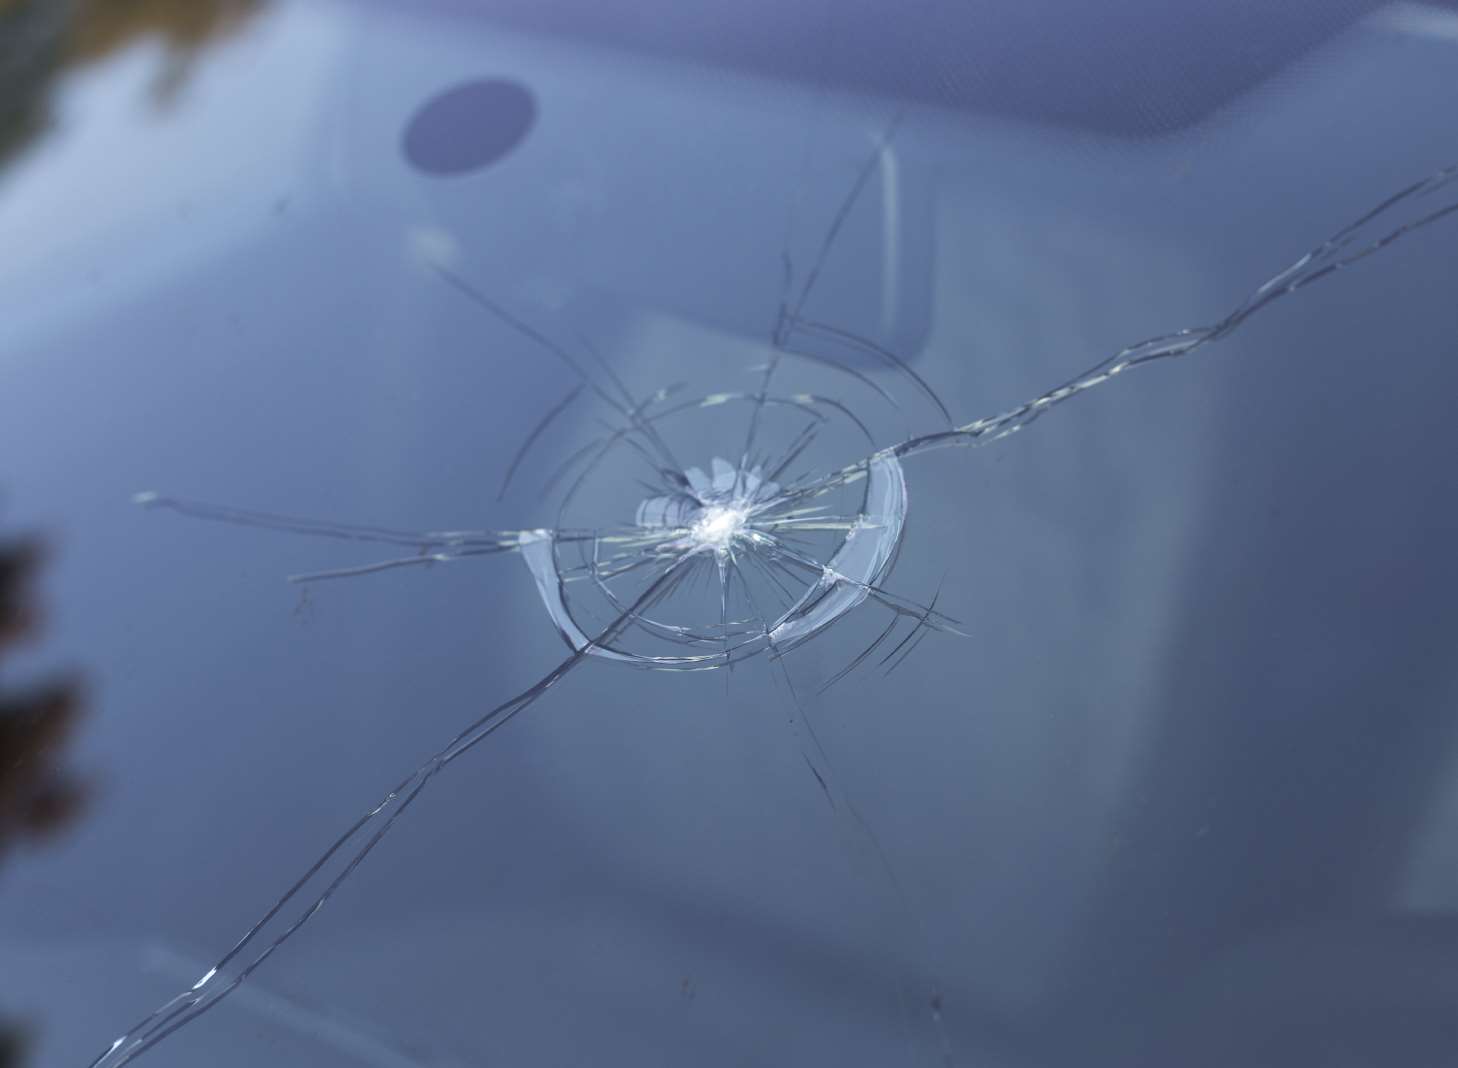 The windscreen was broken by a rock. Stock image.